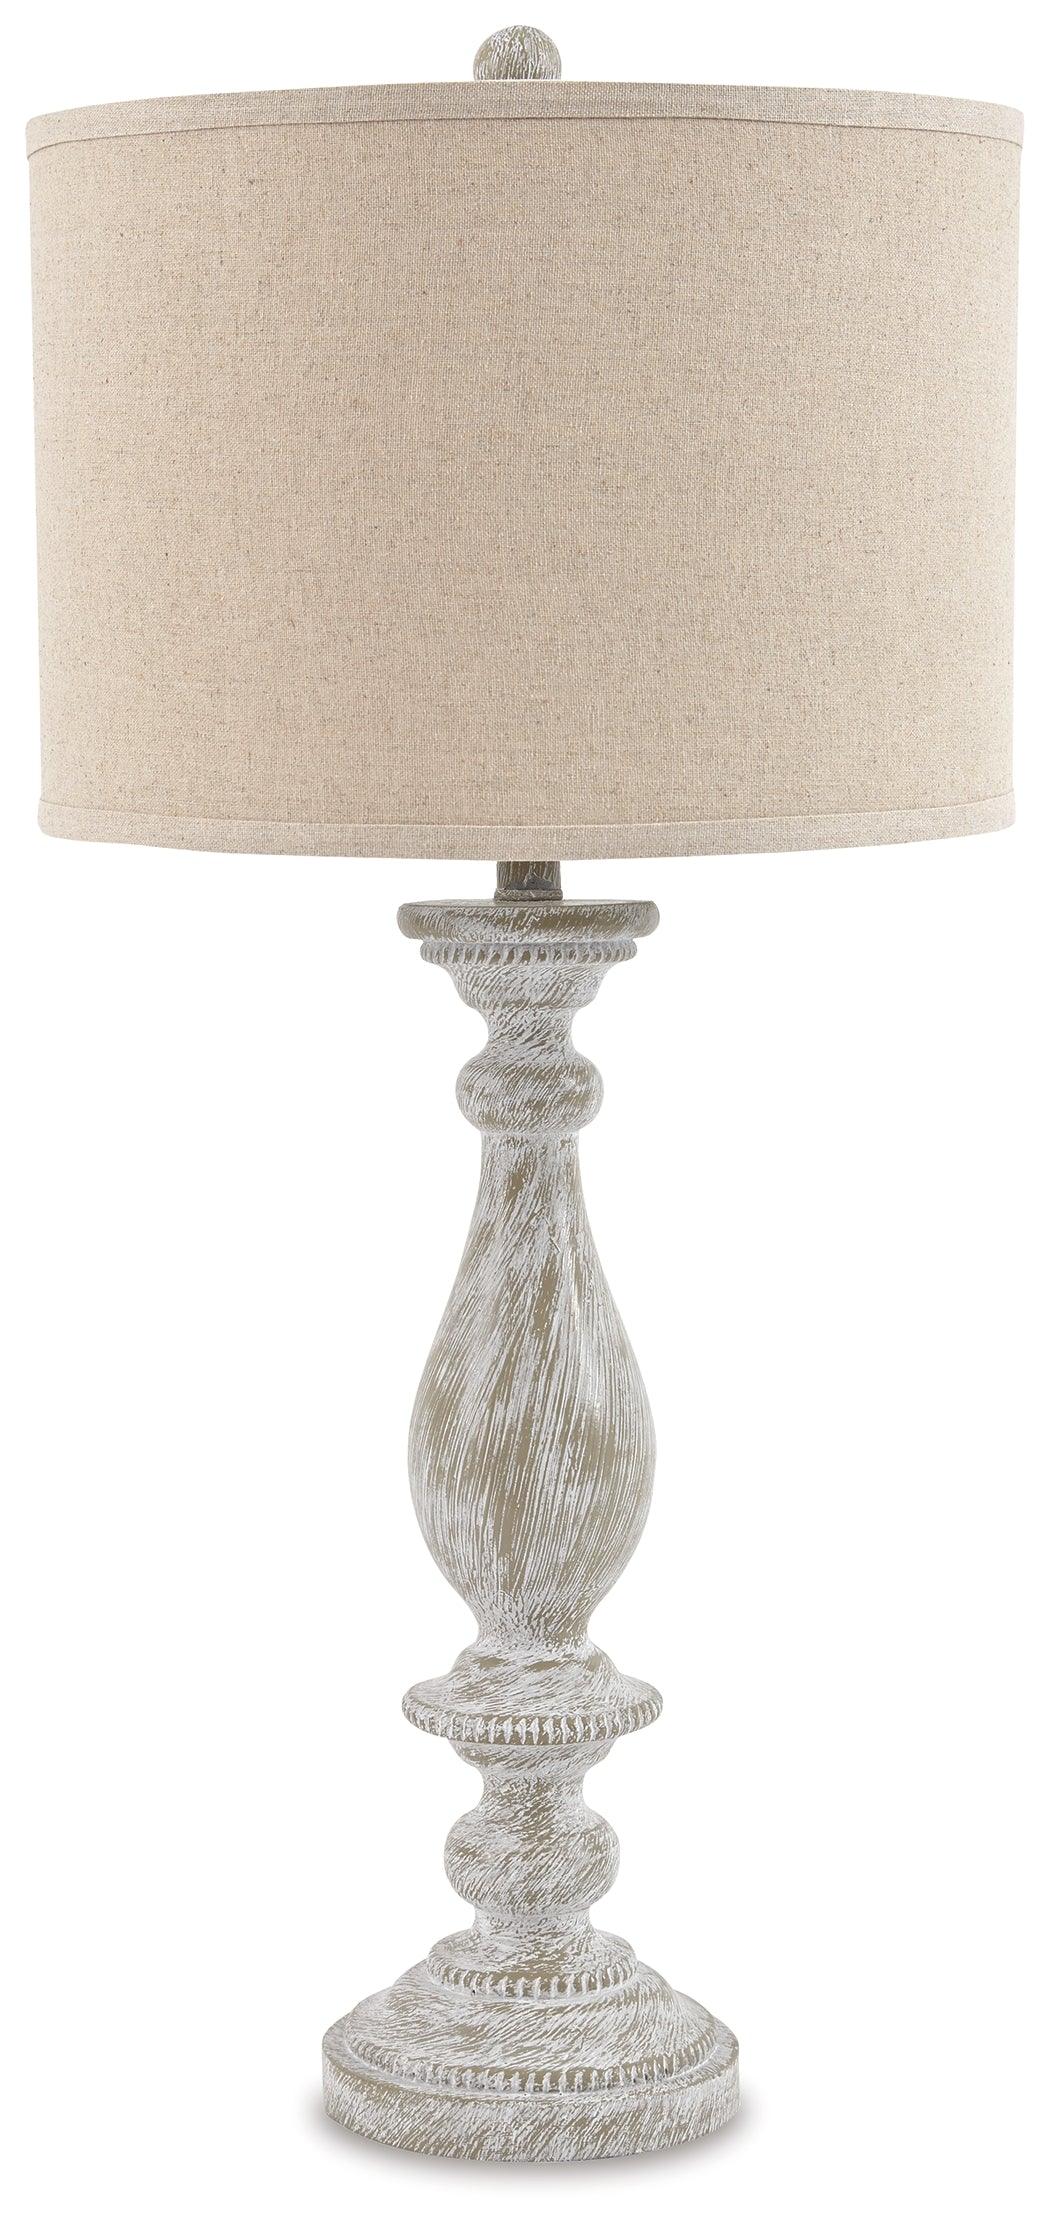 Bernadate Whitewash 3-Piece Floor Lamp With 2 Table Lamps Set - Ella Furniture